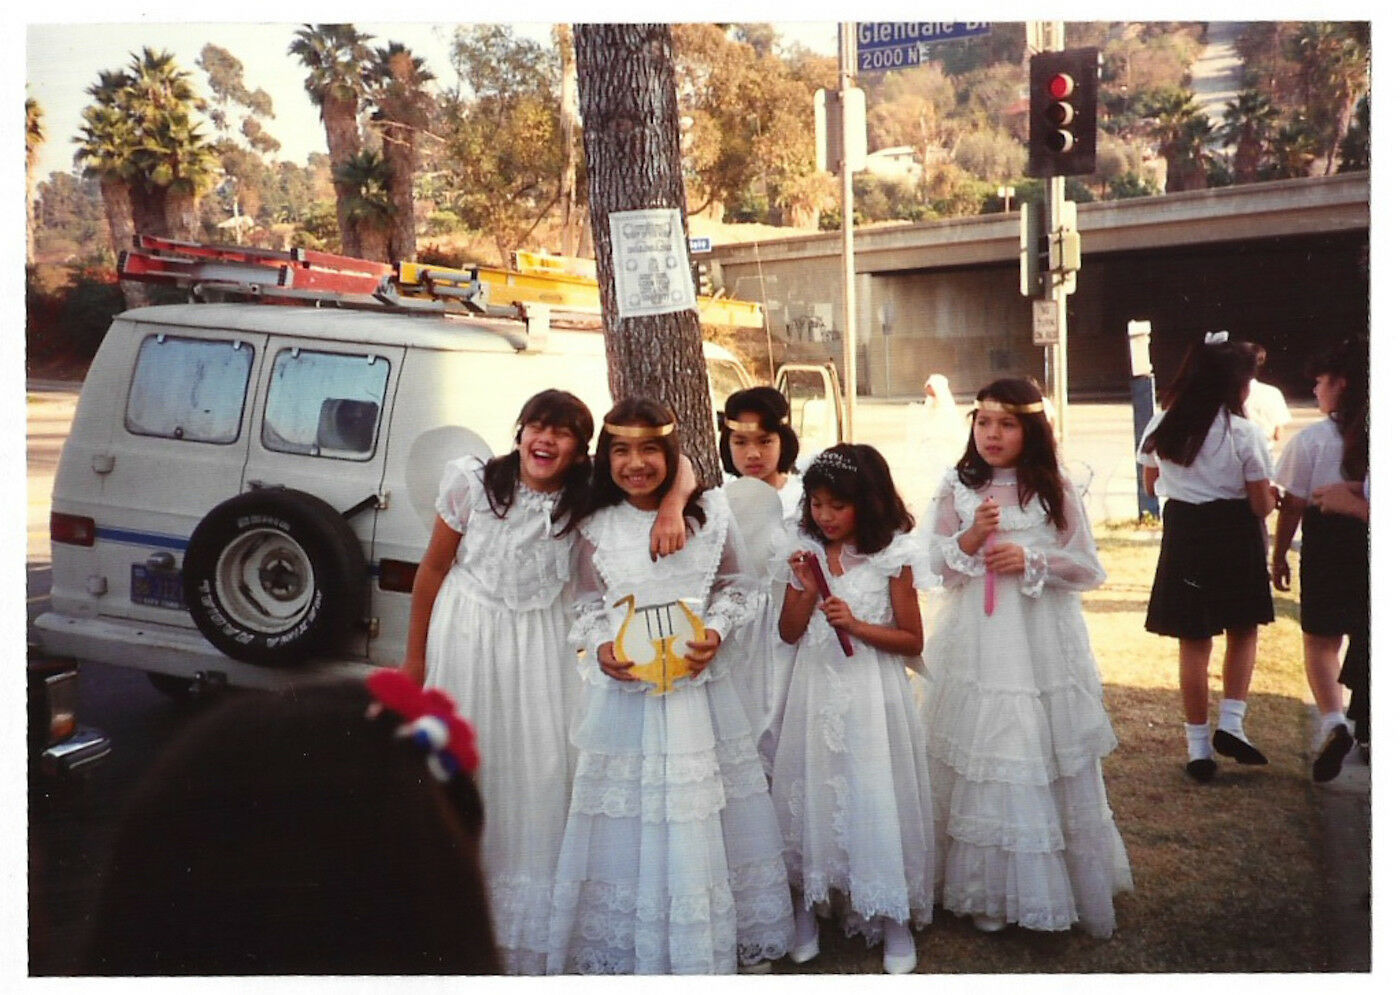 Early 1980s First Communion Photo (Saint Teresa of Avila Catholic Church, L.A.)